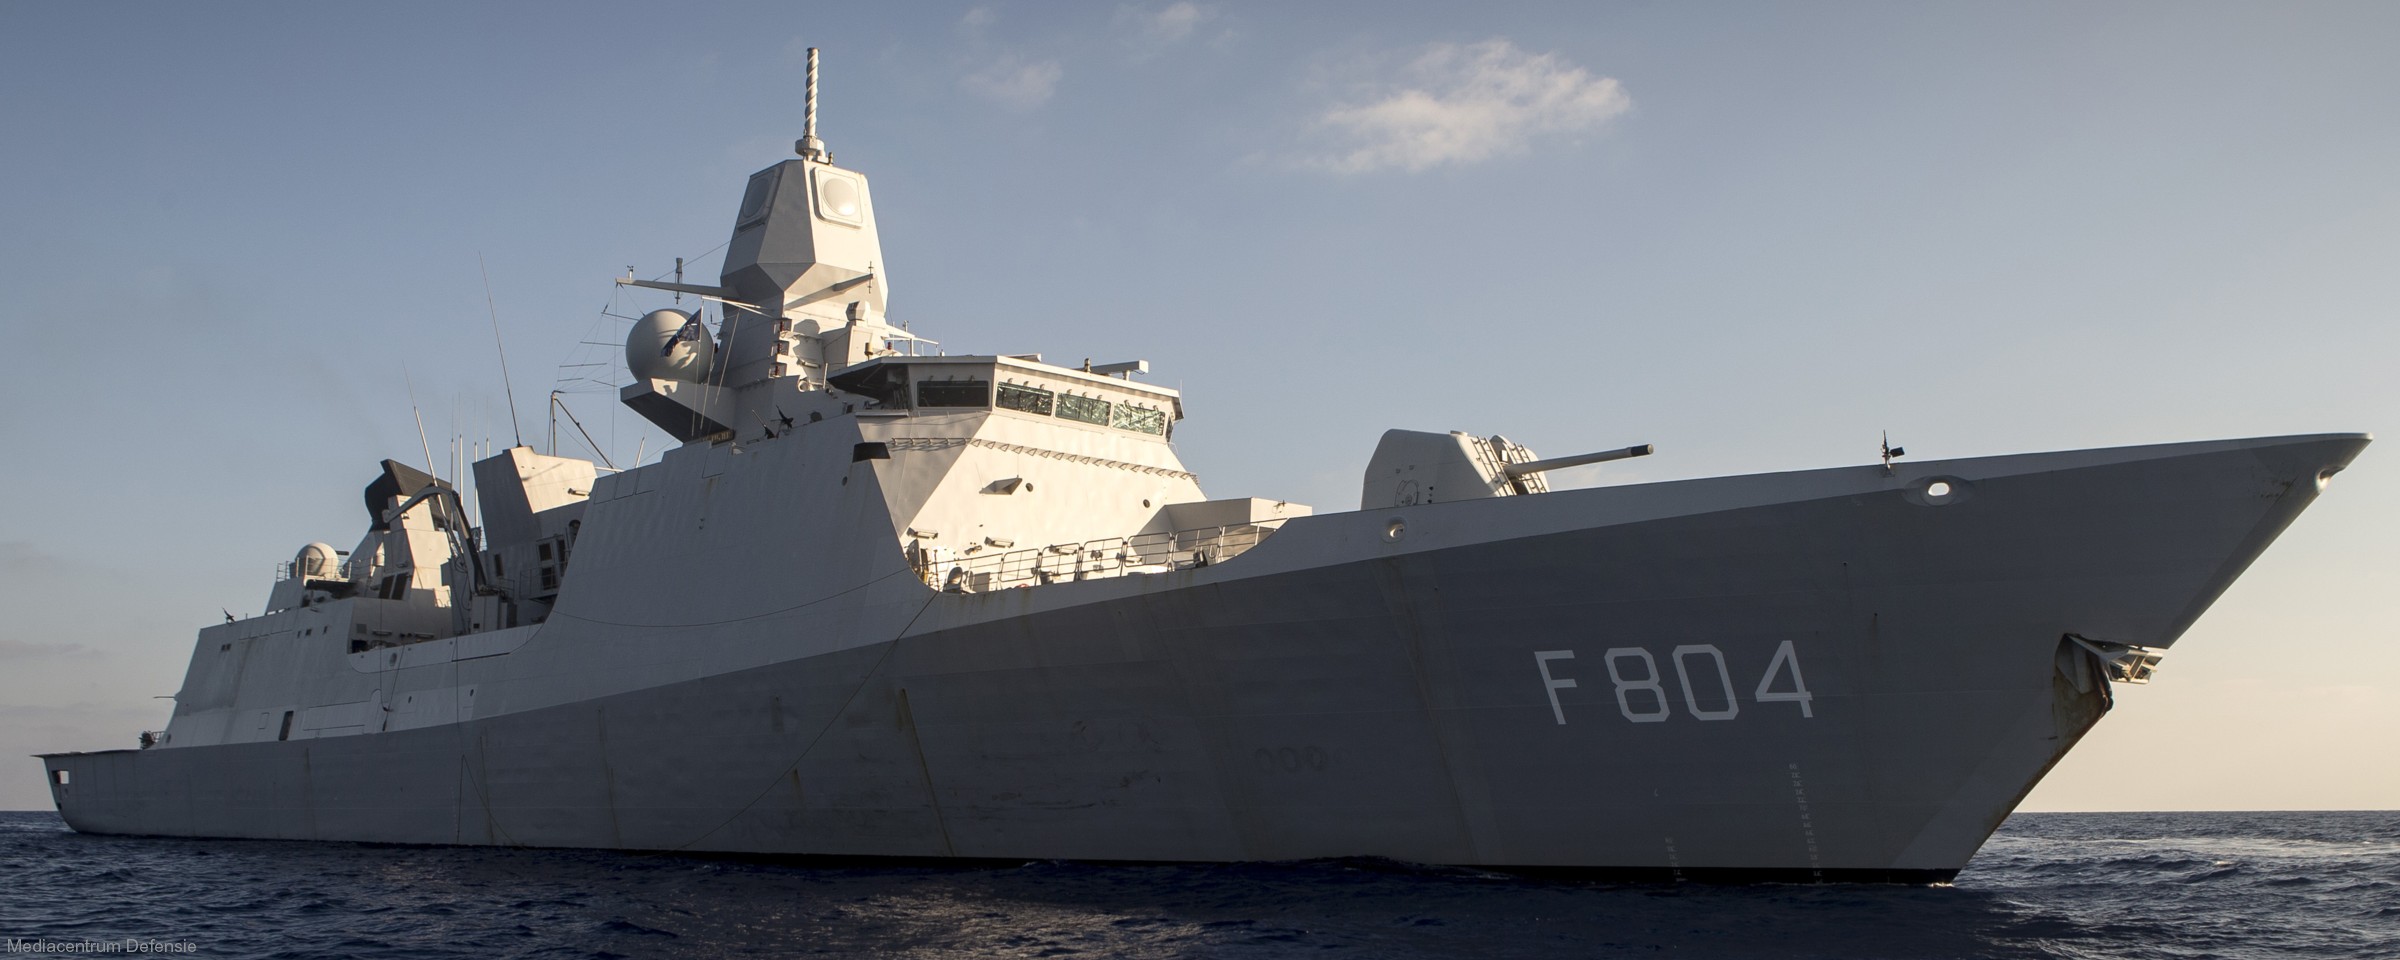 f-804 hnlms de ruyter guided missile frigate ffg lcf royal netherlands navy 05